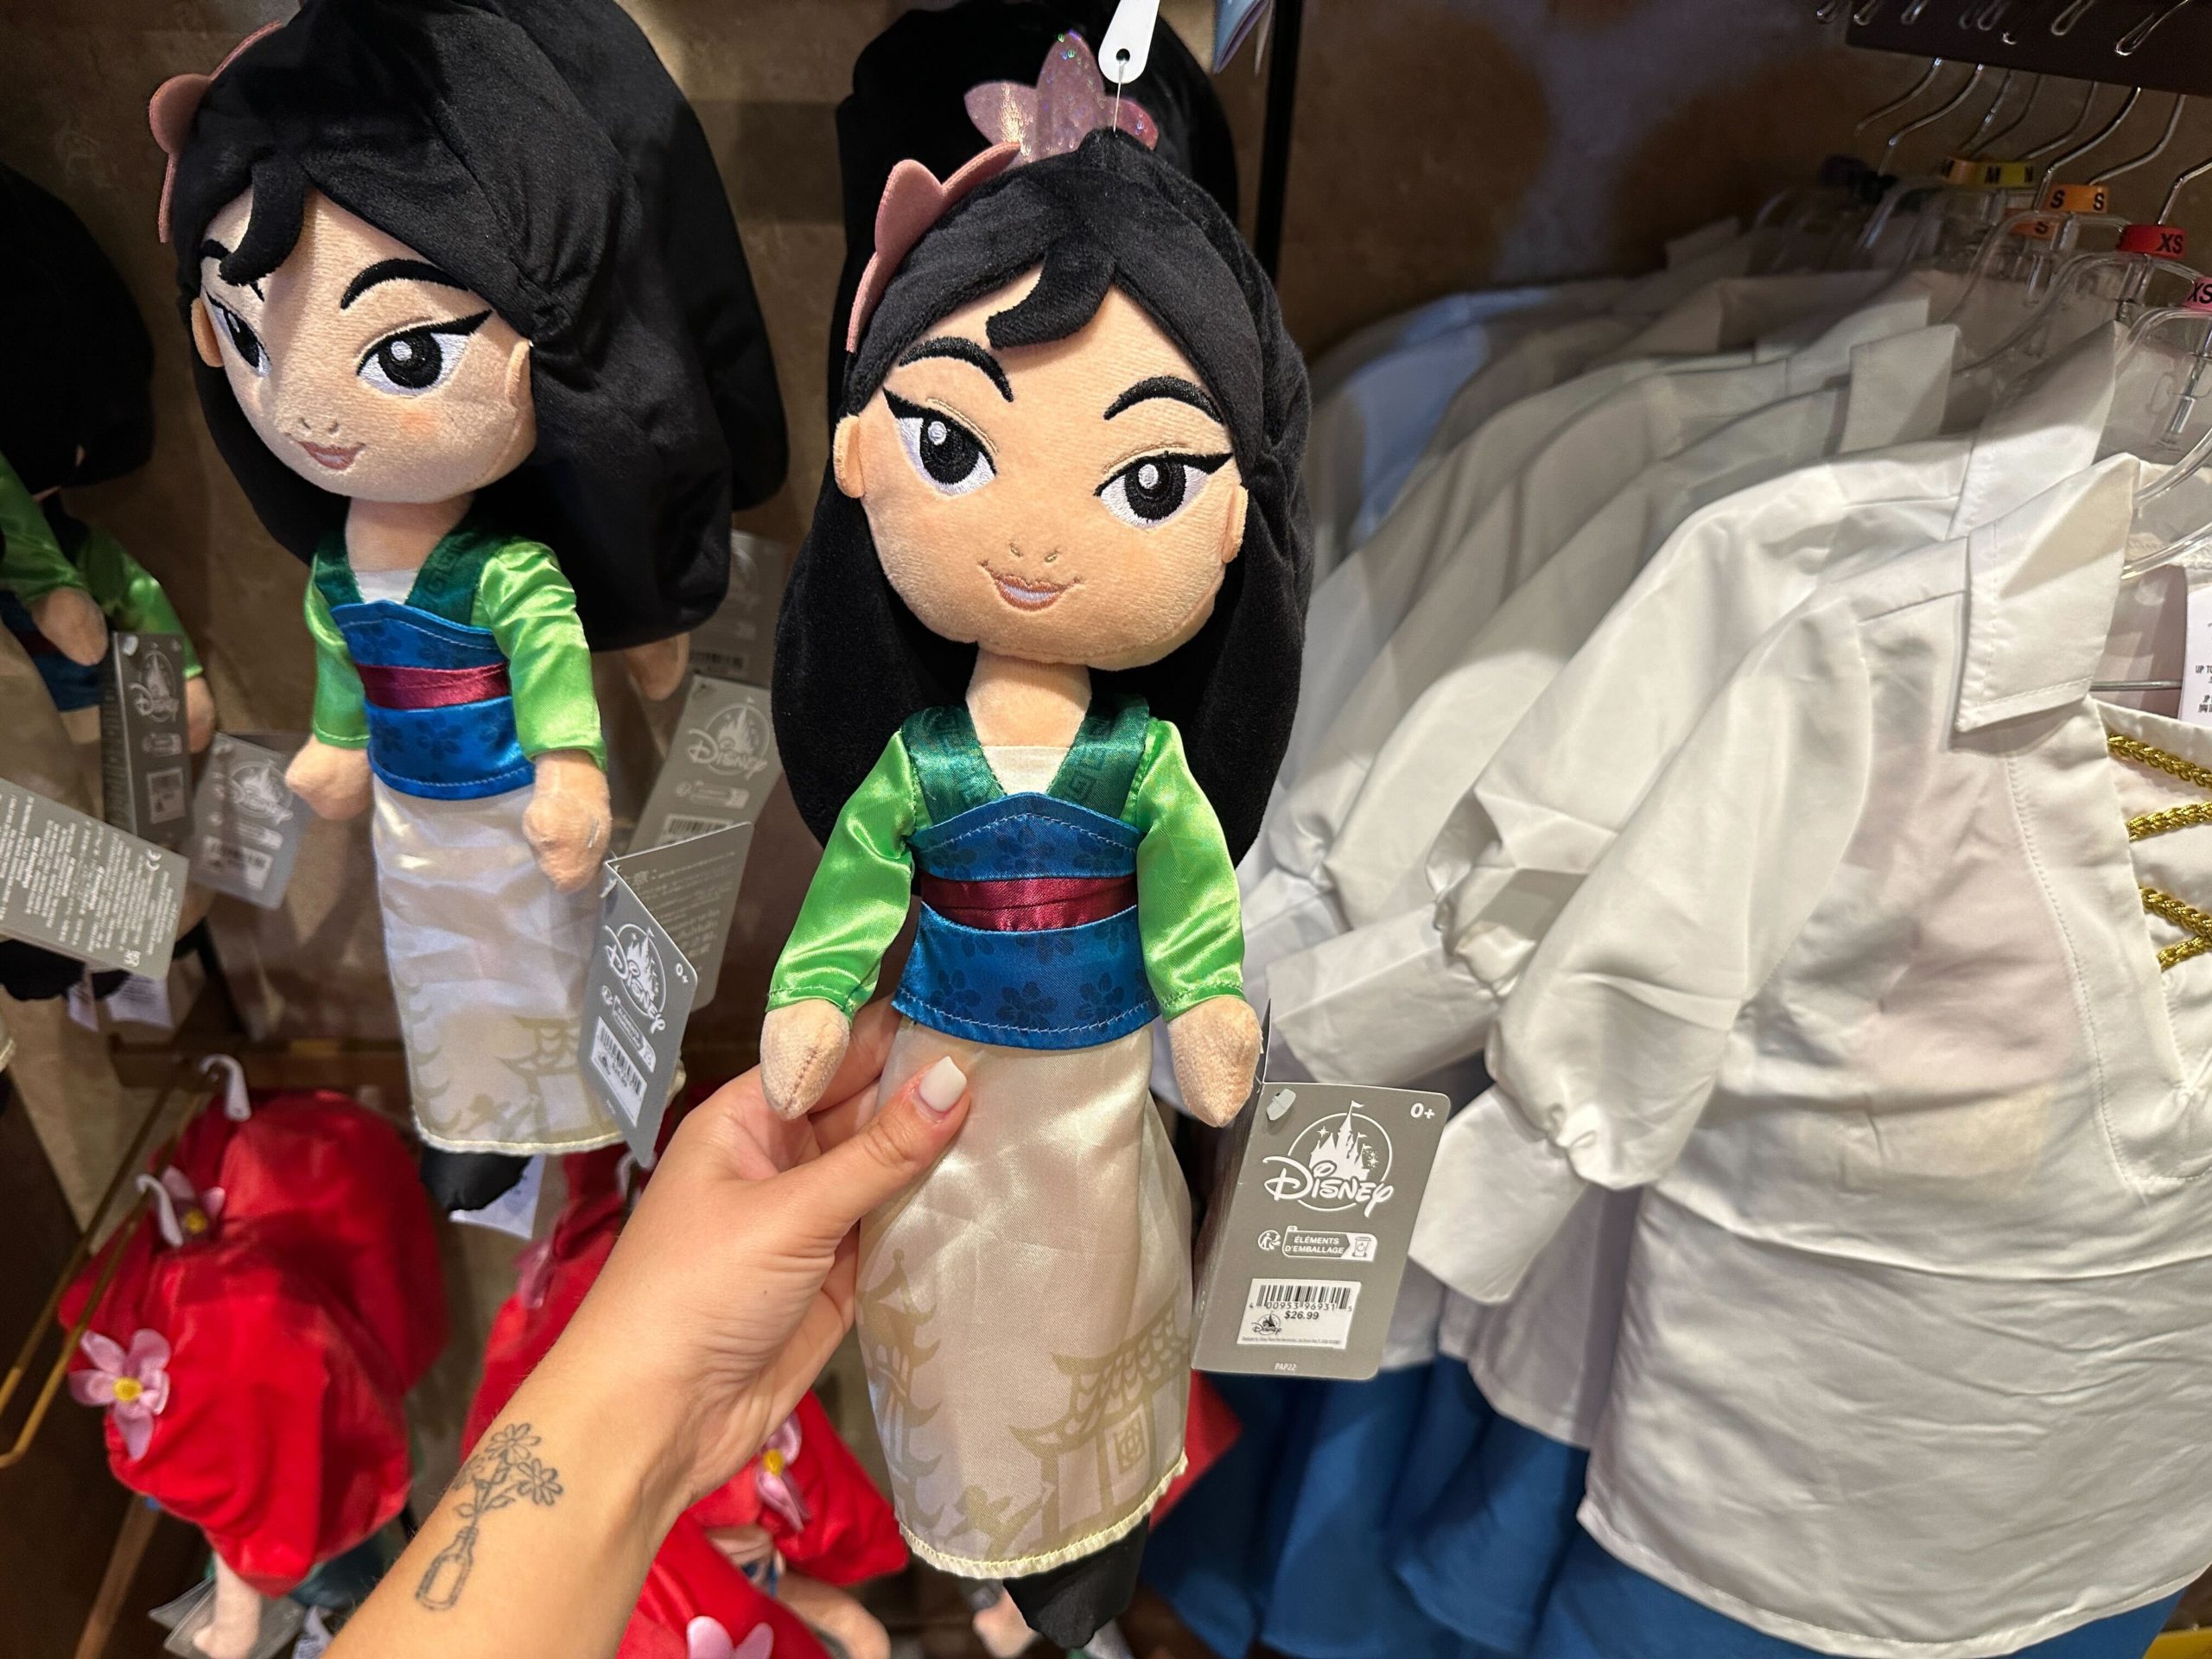 Adorable Princess Plush Dolls Found at Magic Kingdom 